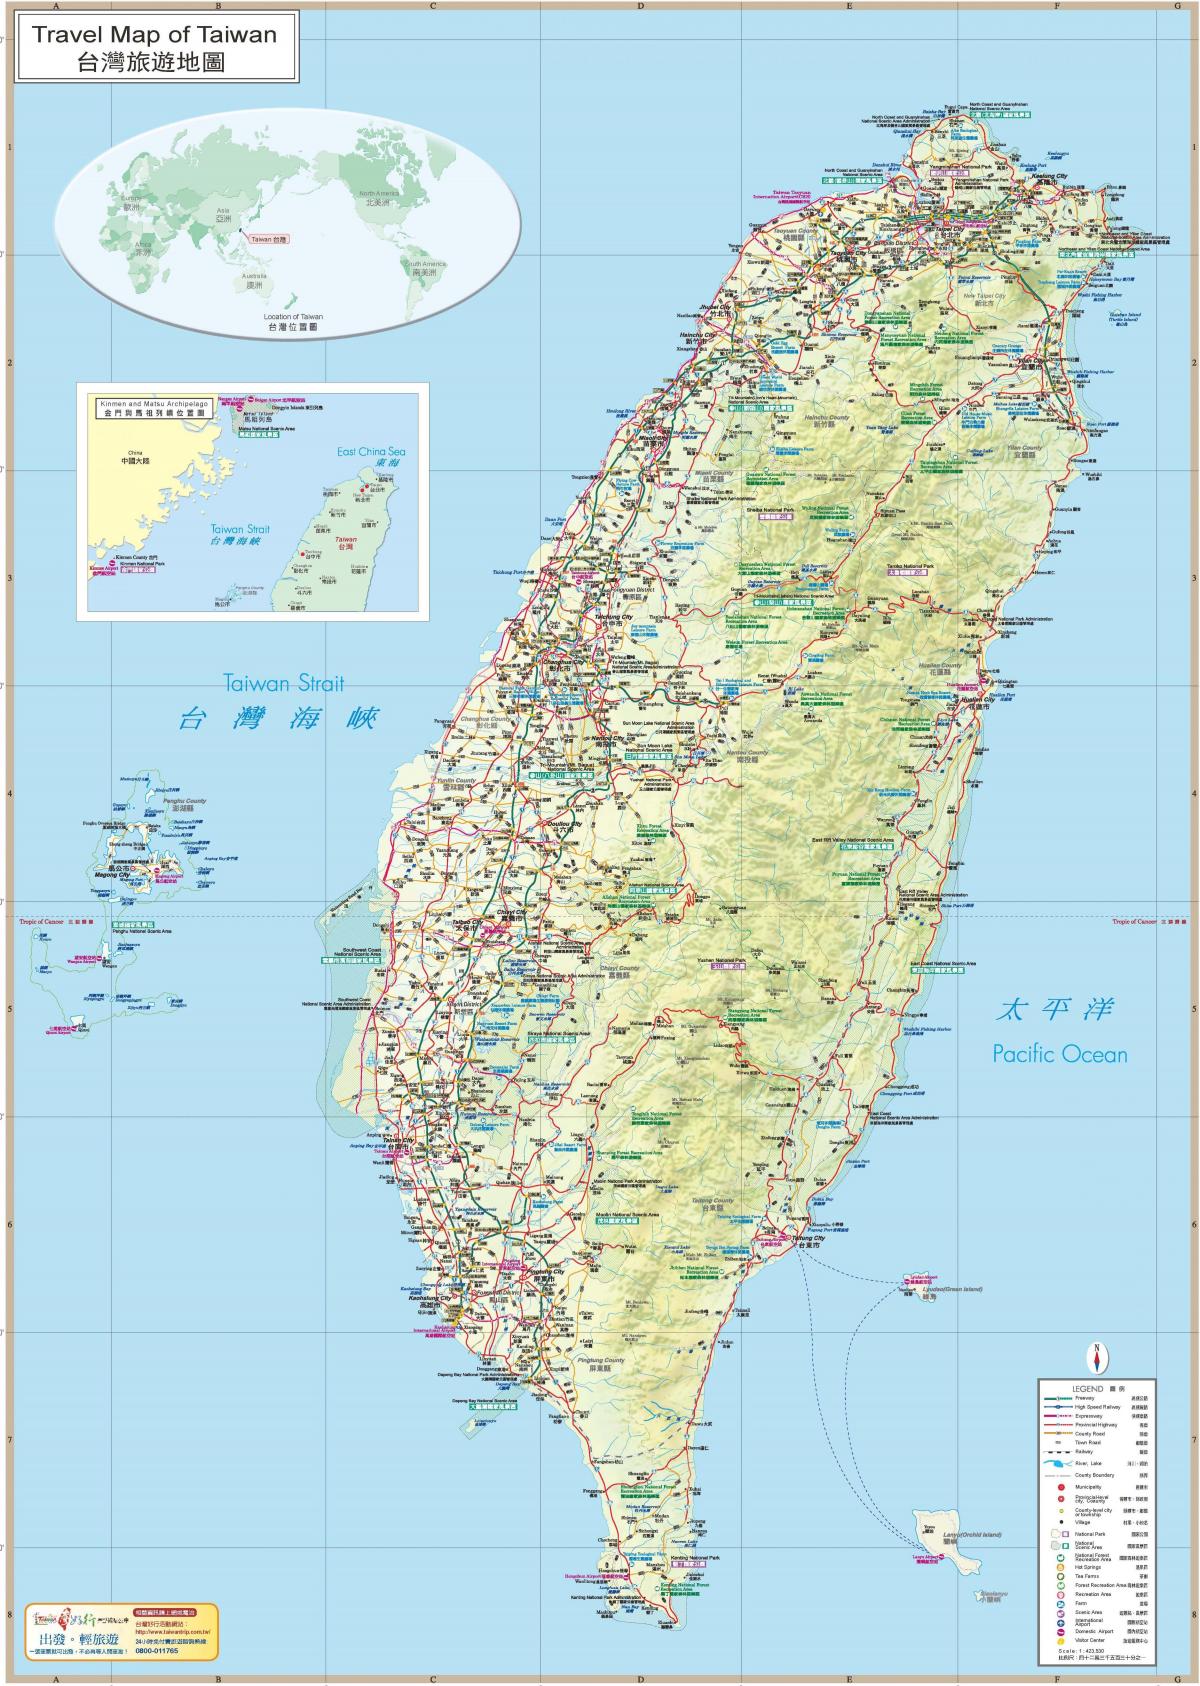 kort over Taiwan turistattraktioner